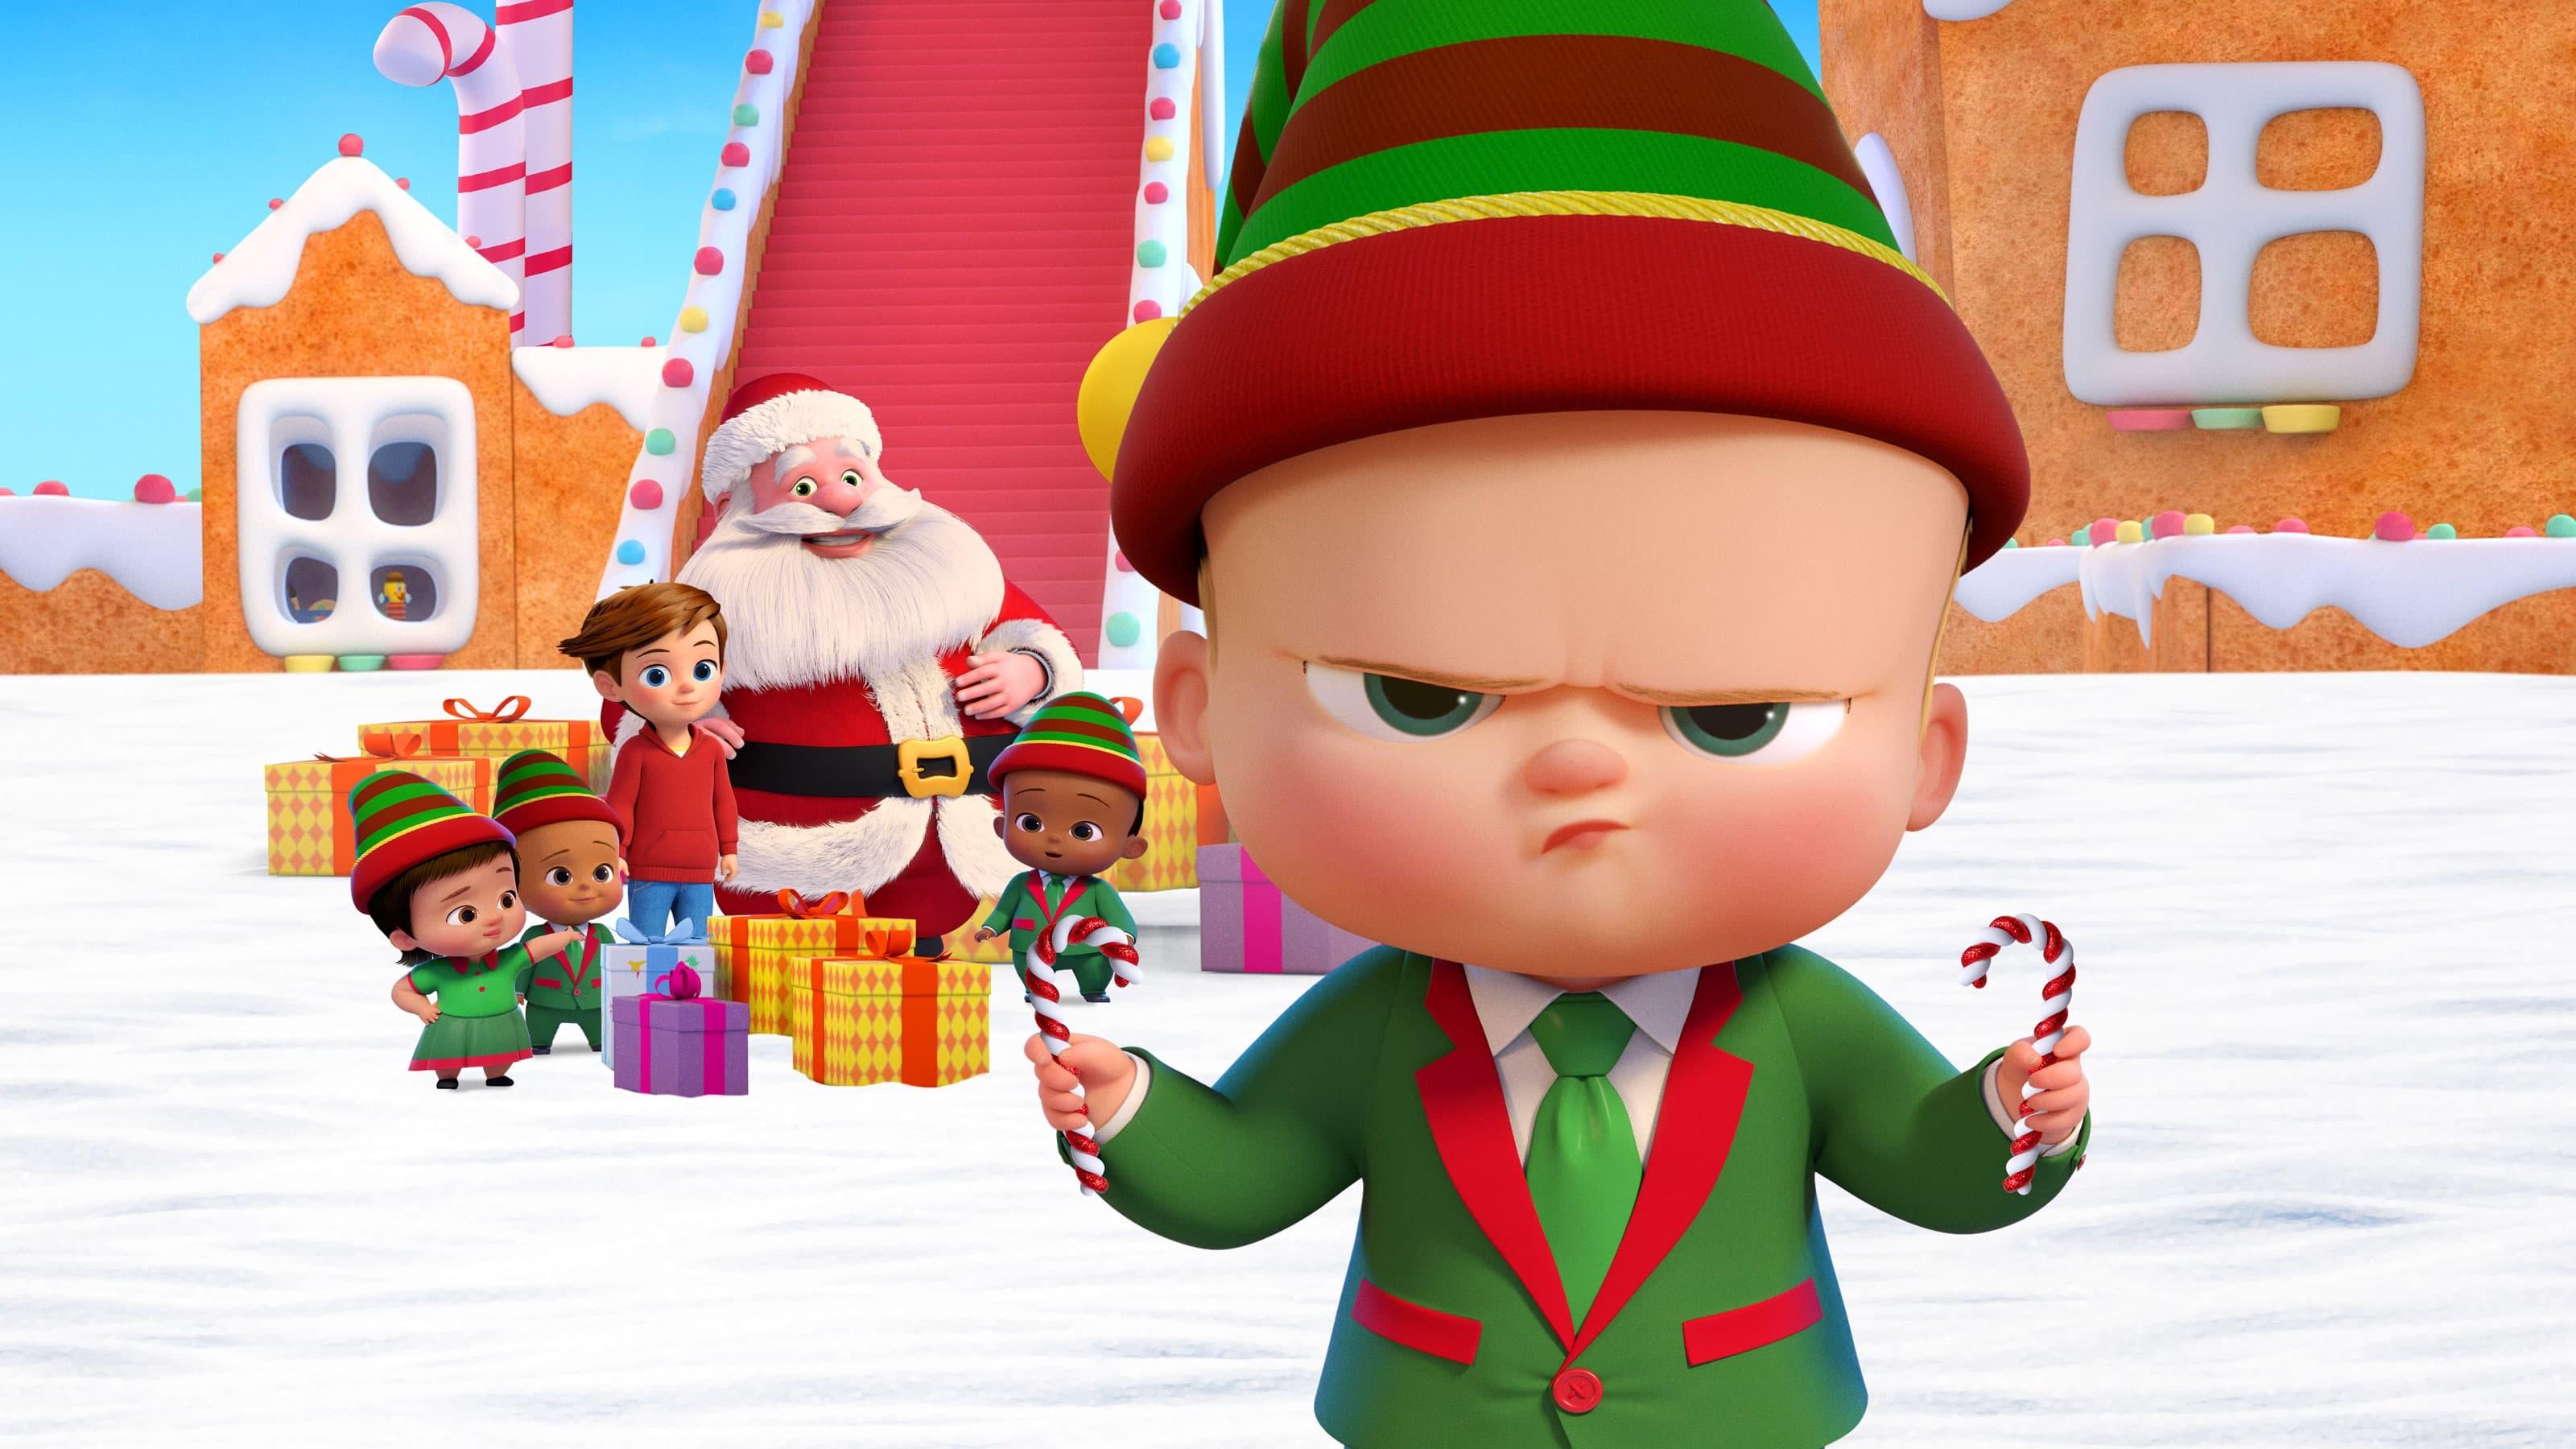 The Boss Baby: Christmas Bonus backdrop